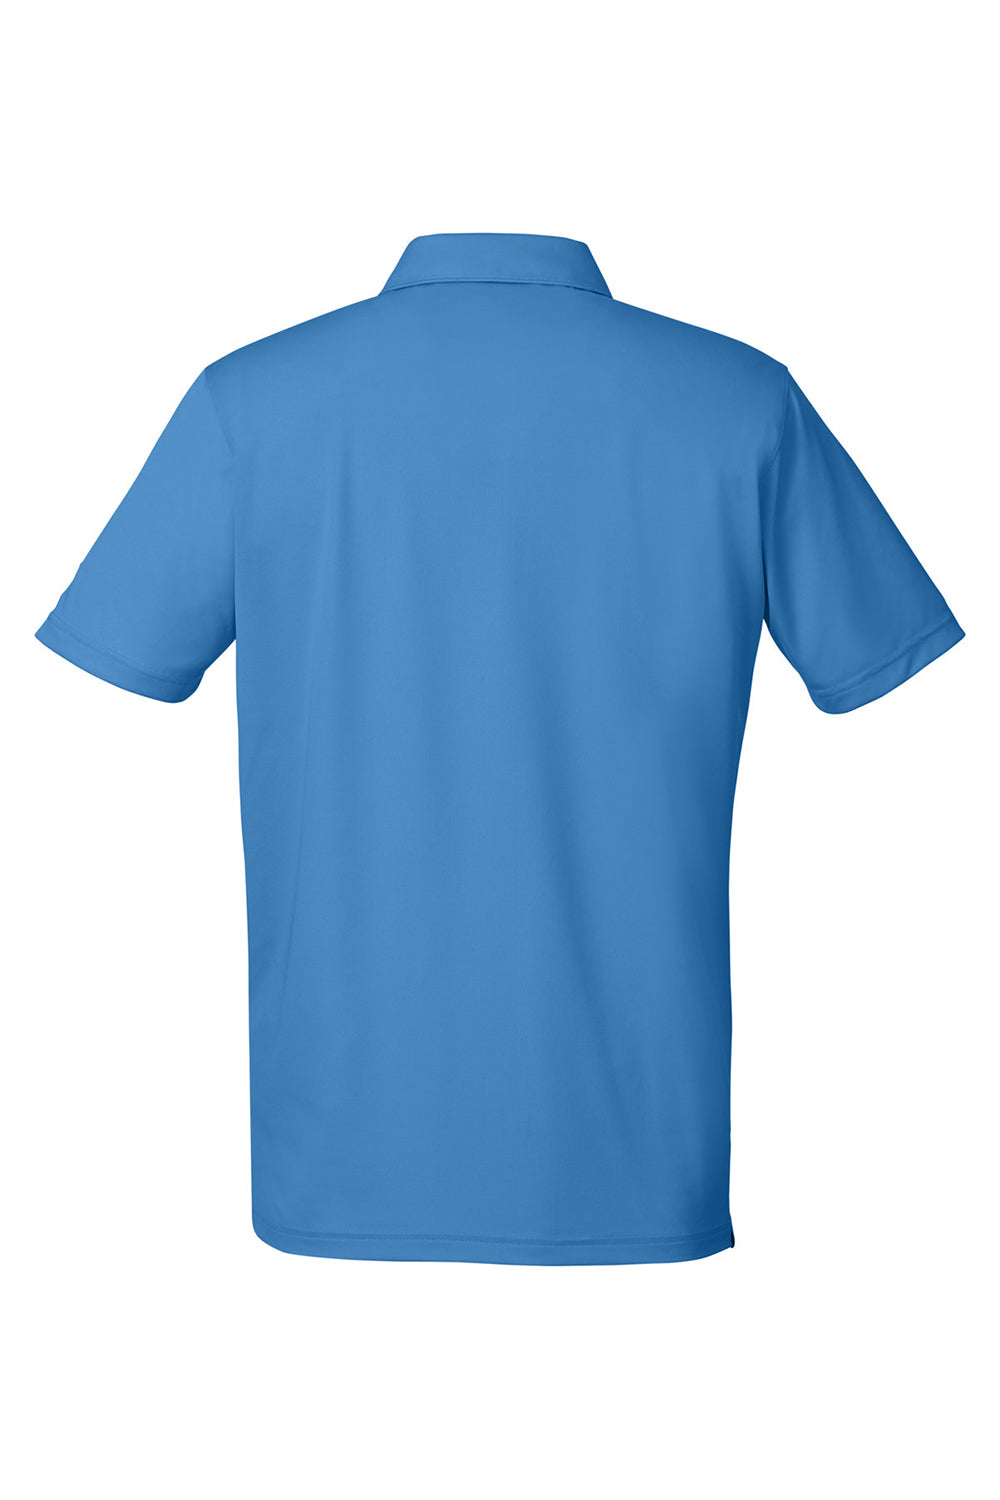 Puma 599120 Mens Gamer Short Sleeve Polo Shirt Bright Cobalt Blue Flat Back